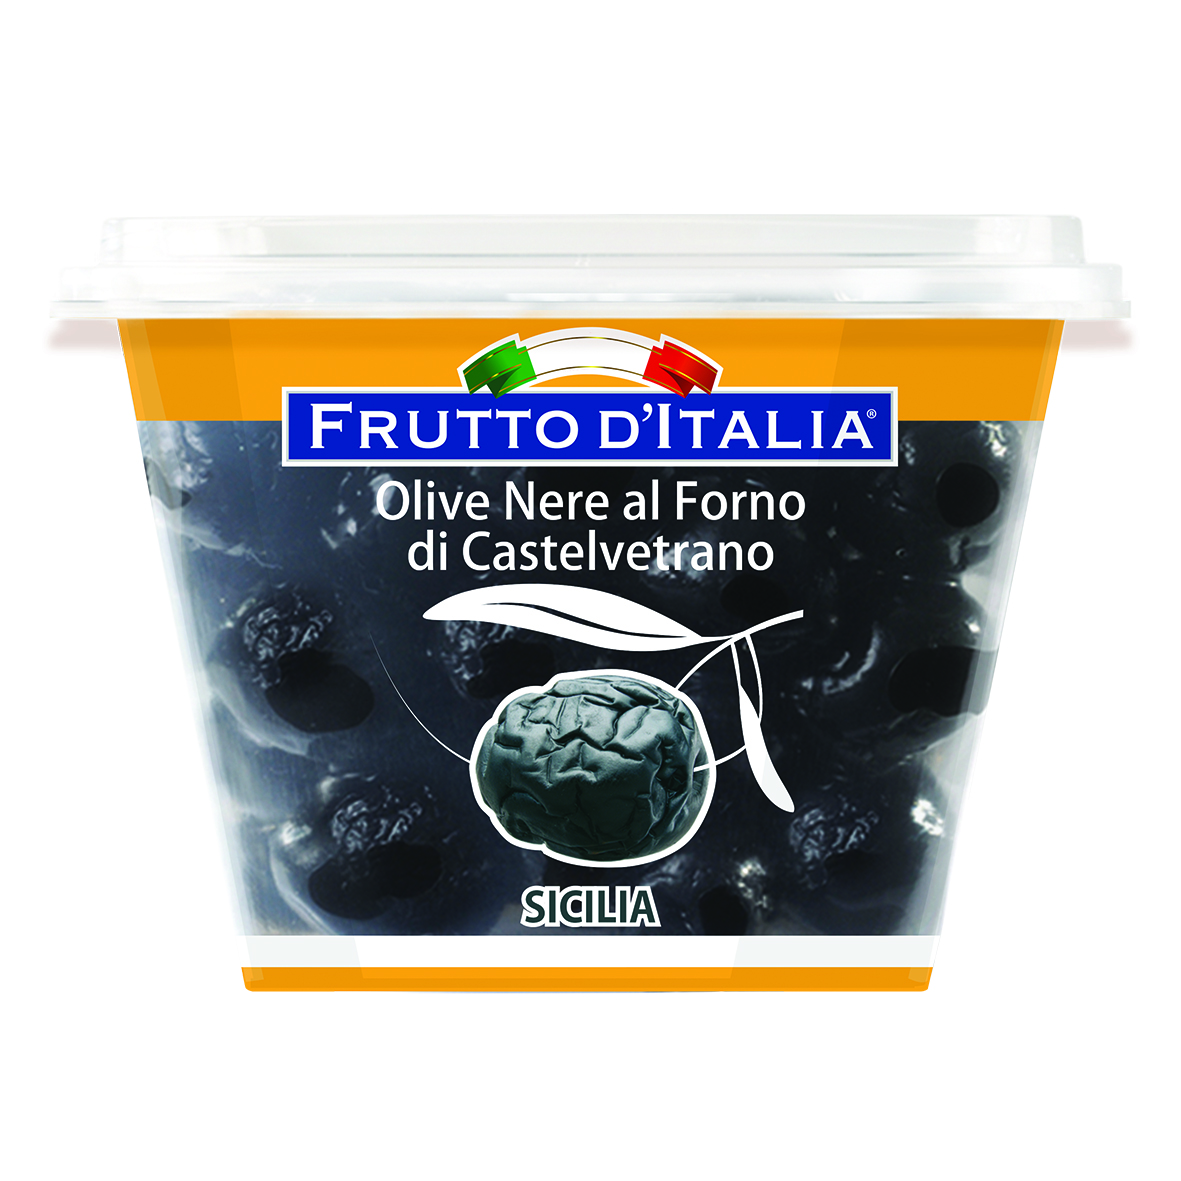 Black Castelvetrano Olives oven backed Italian Convenience Food Roasted Olives